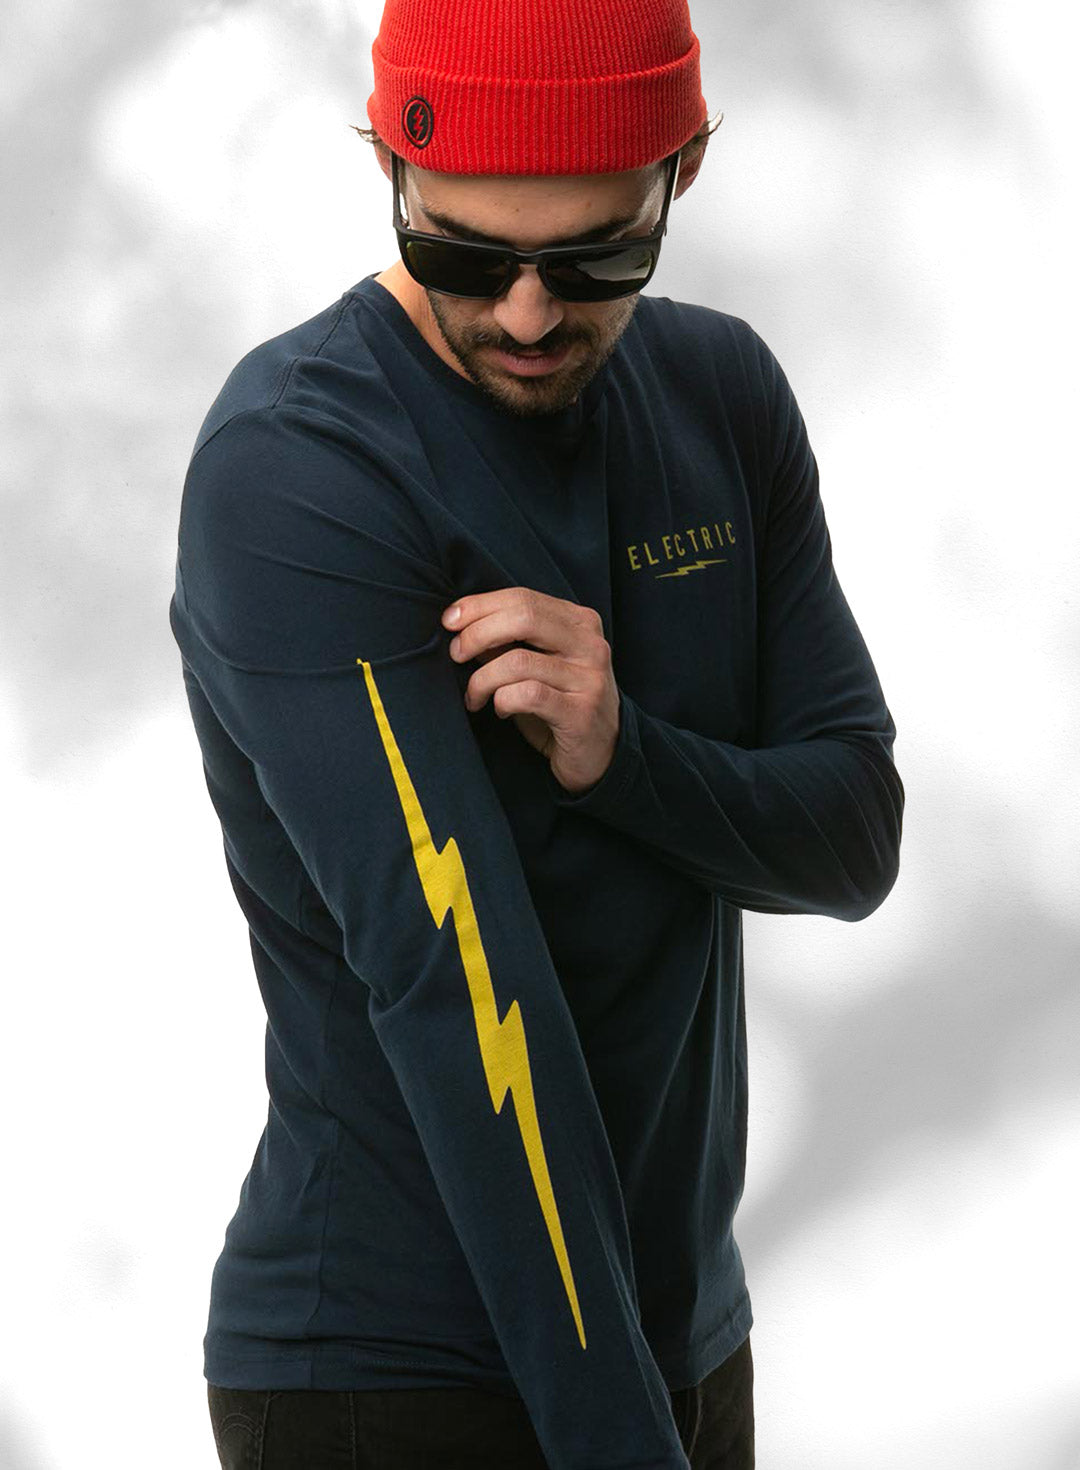 new electric brand long sleeve tee shirts on model